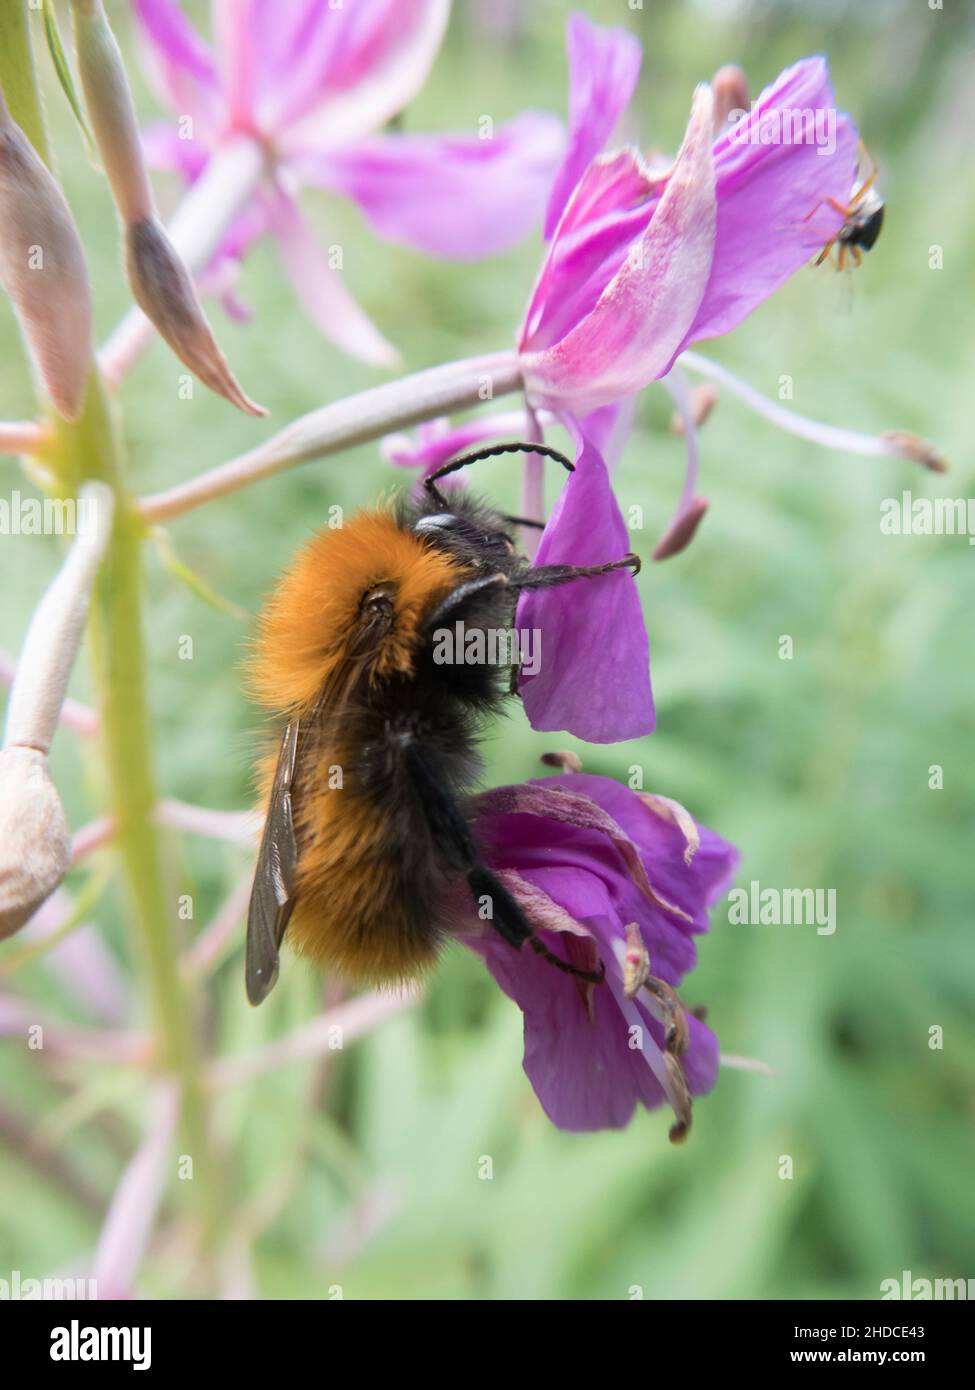 Hummel auf Weidenröschen, Bombus sp., Epilobium sp. / Bumble Bee on Willow Herb, Bombus sp., Epilobium sp. Stock Photo